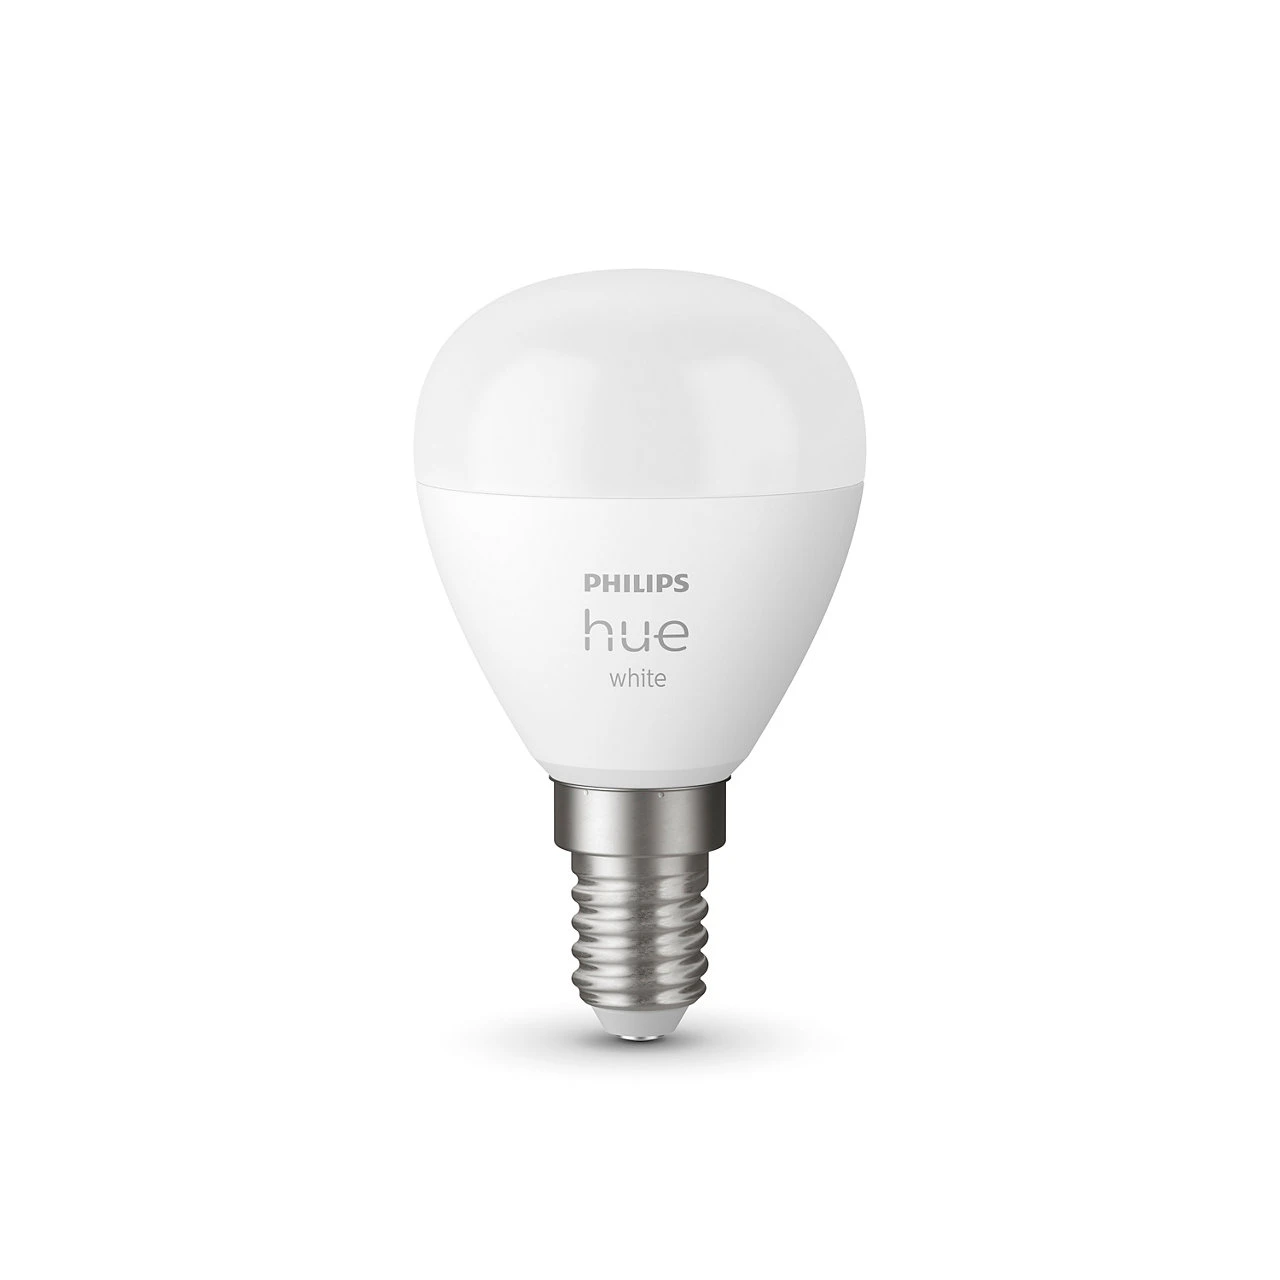 Hue Lustre E14 LED Bulb - White and Colour Ambiance